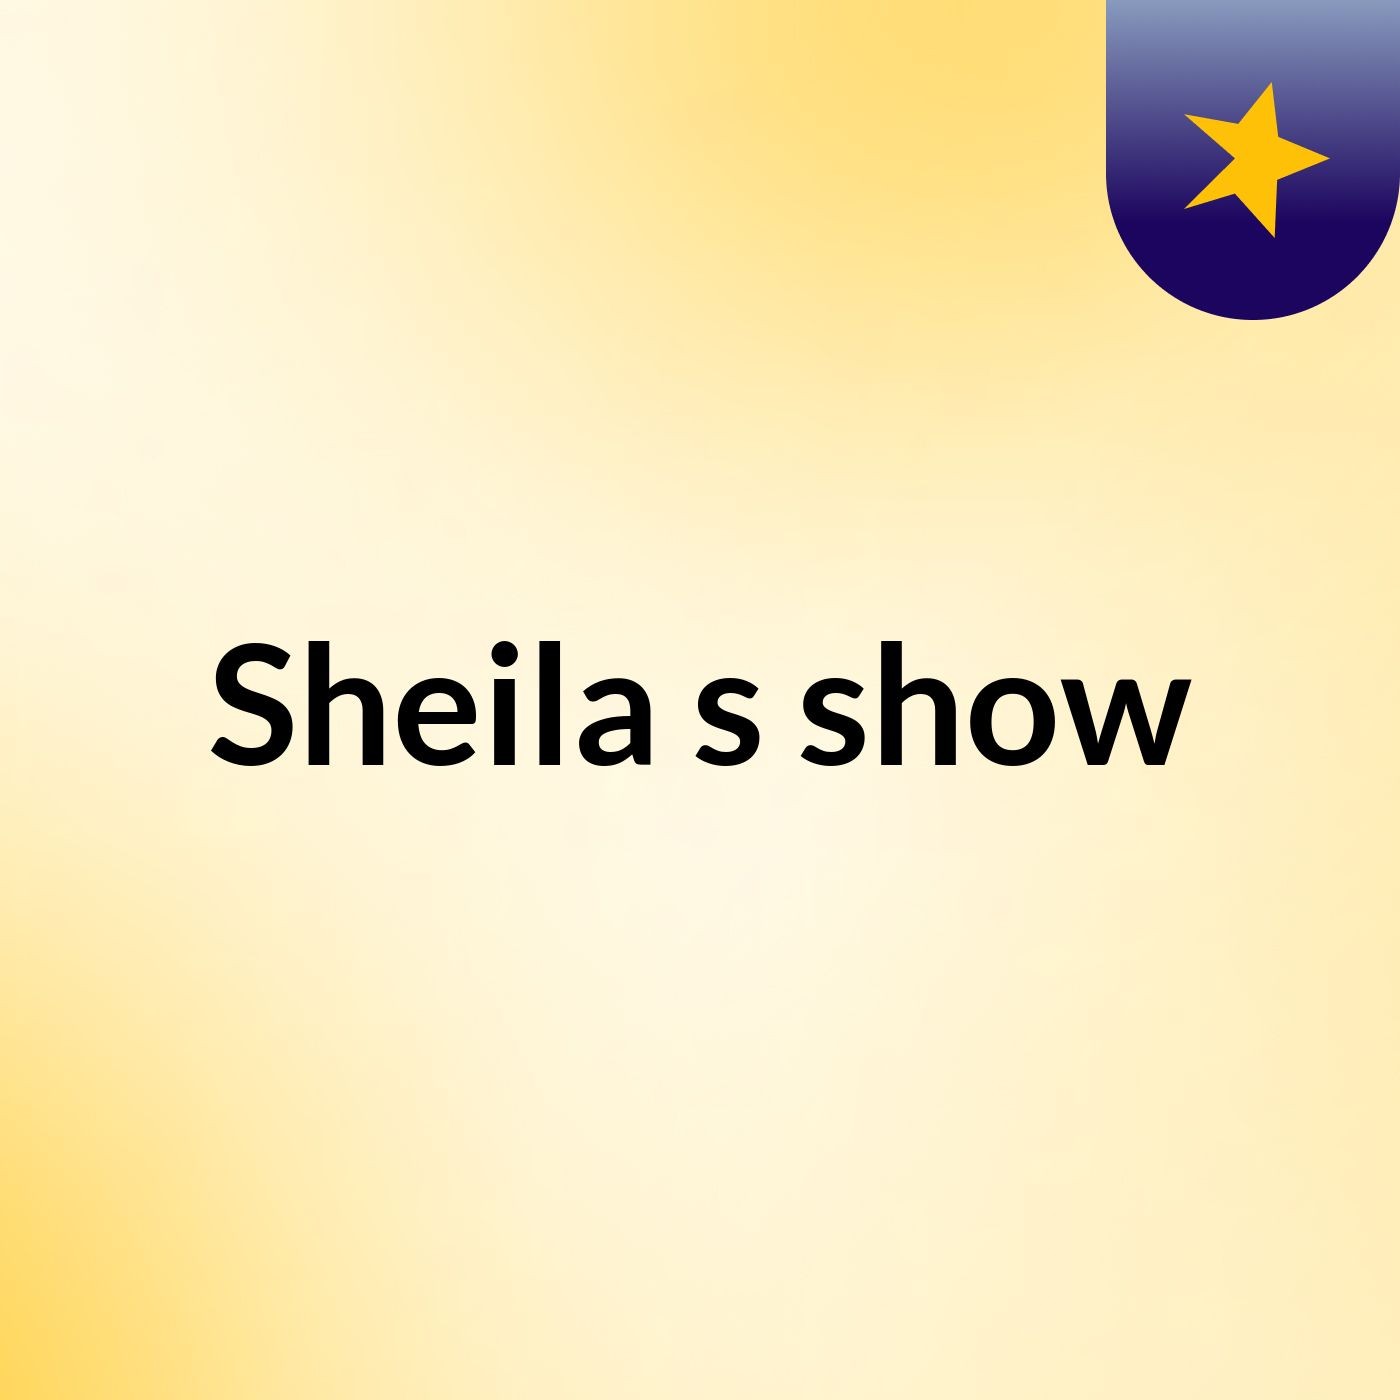 Sheila's show